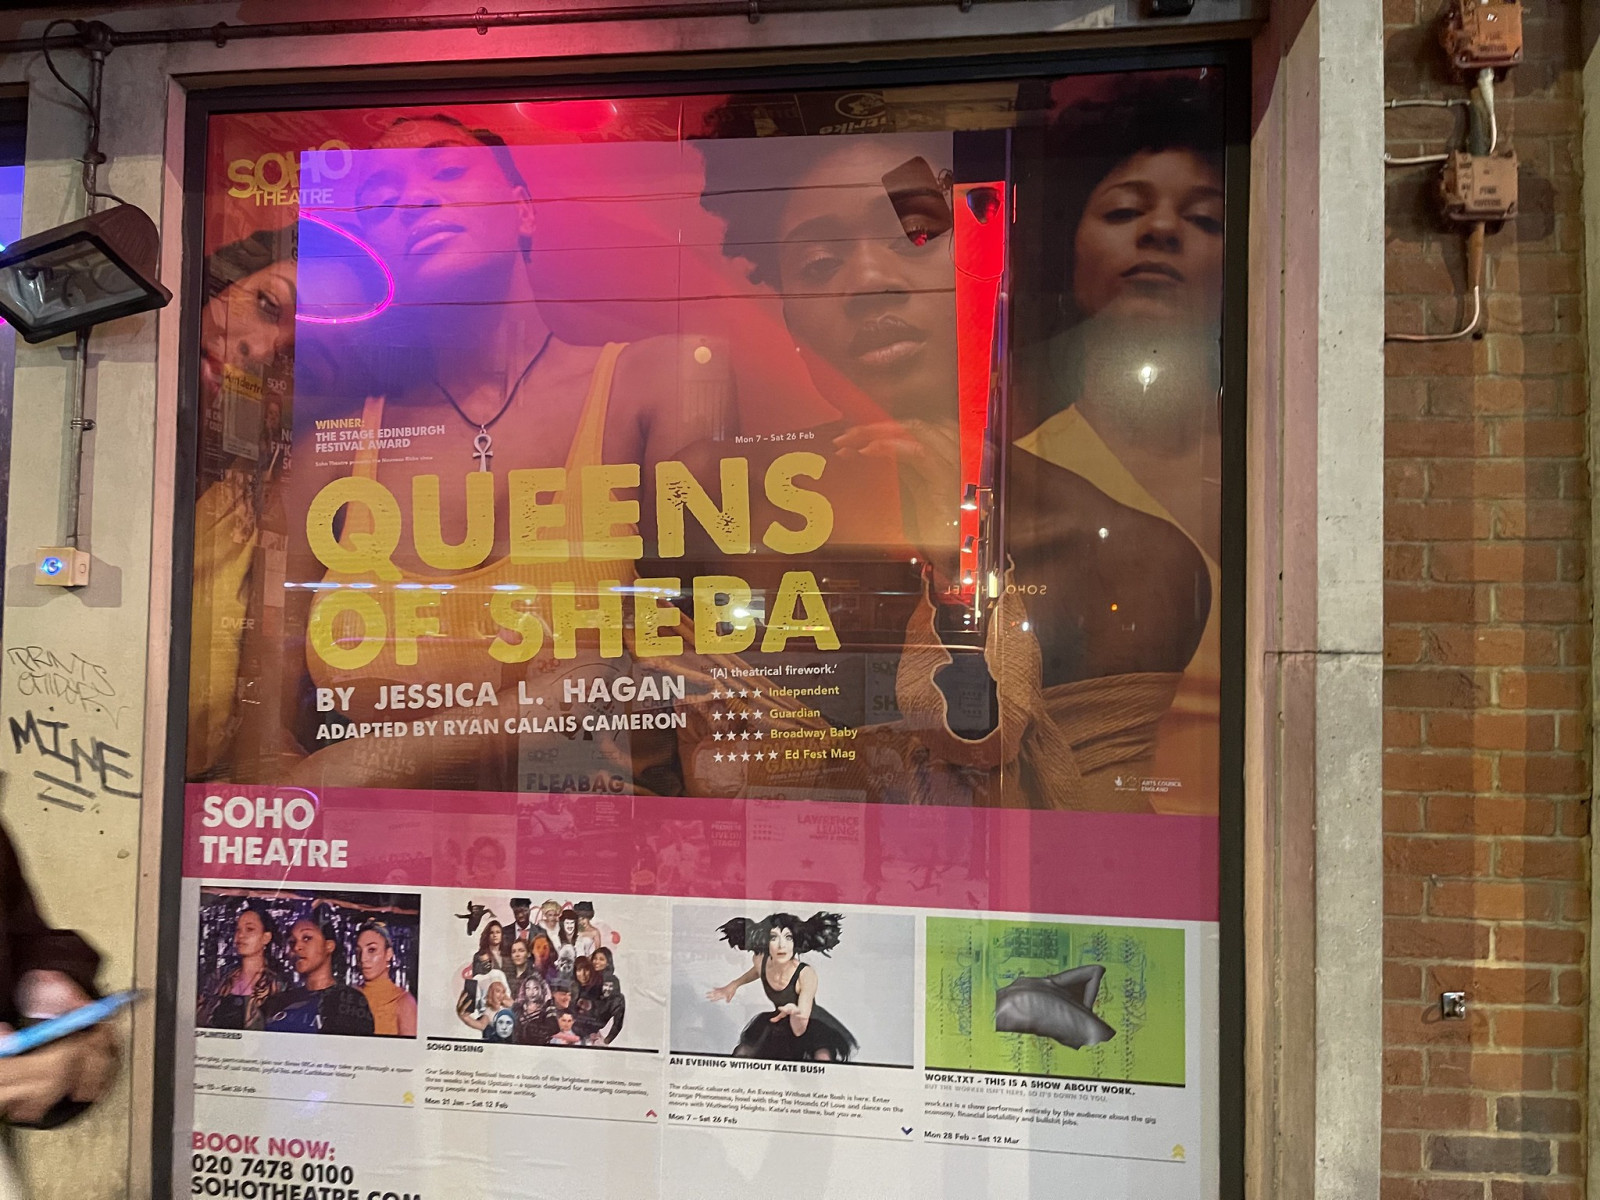 Queens of Sheba at Soho Theatre